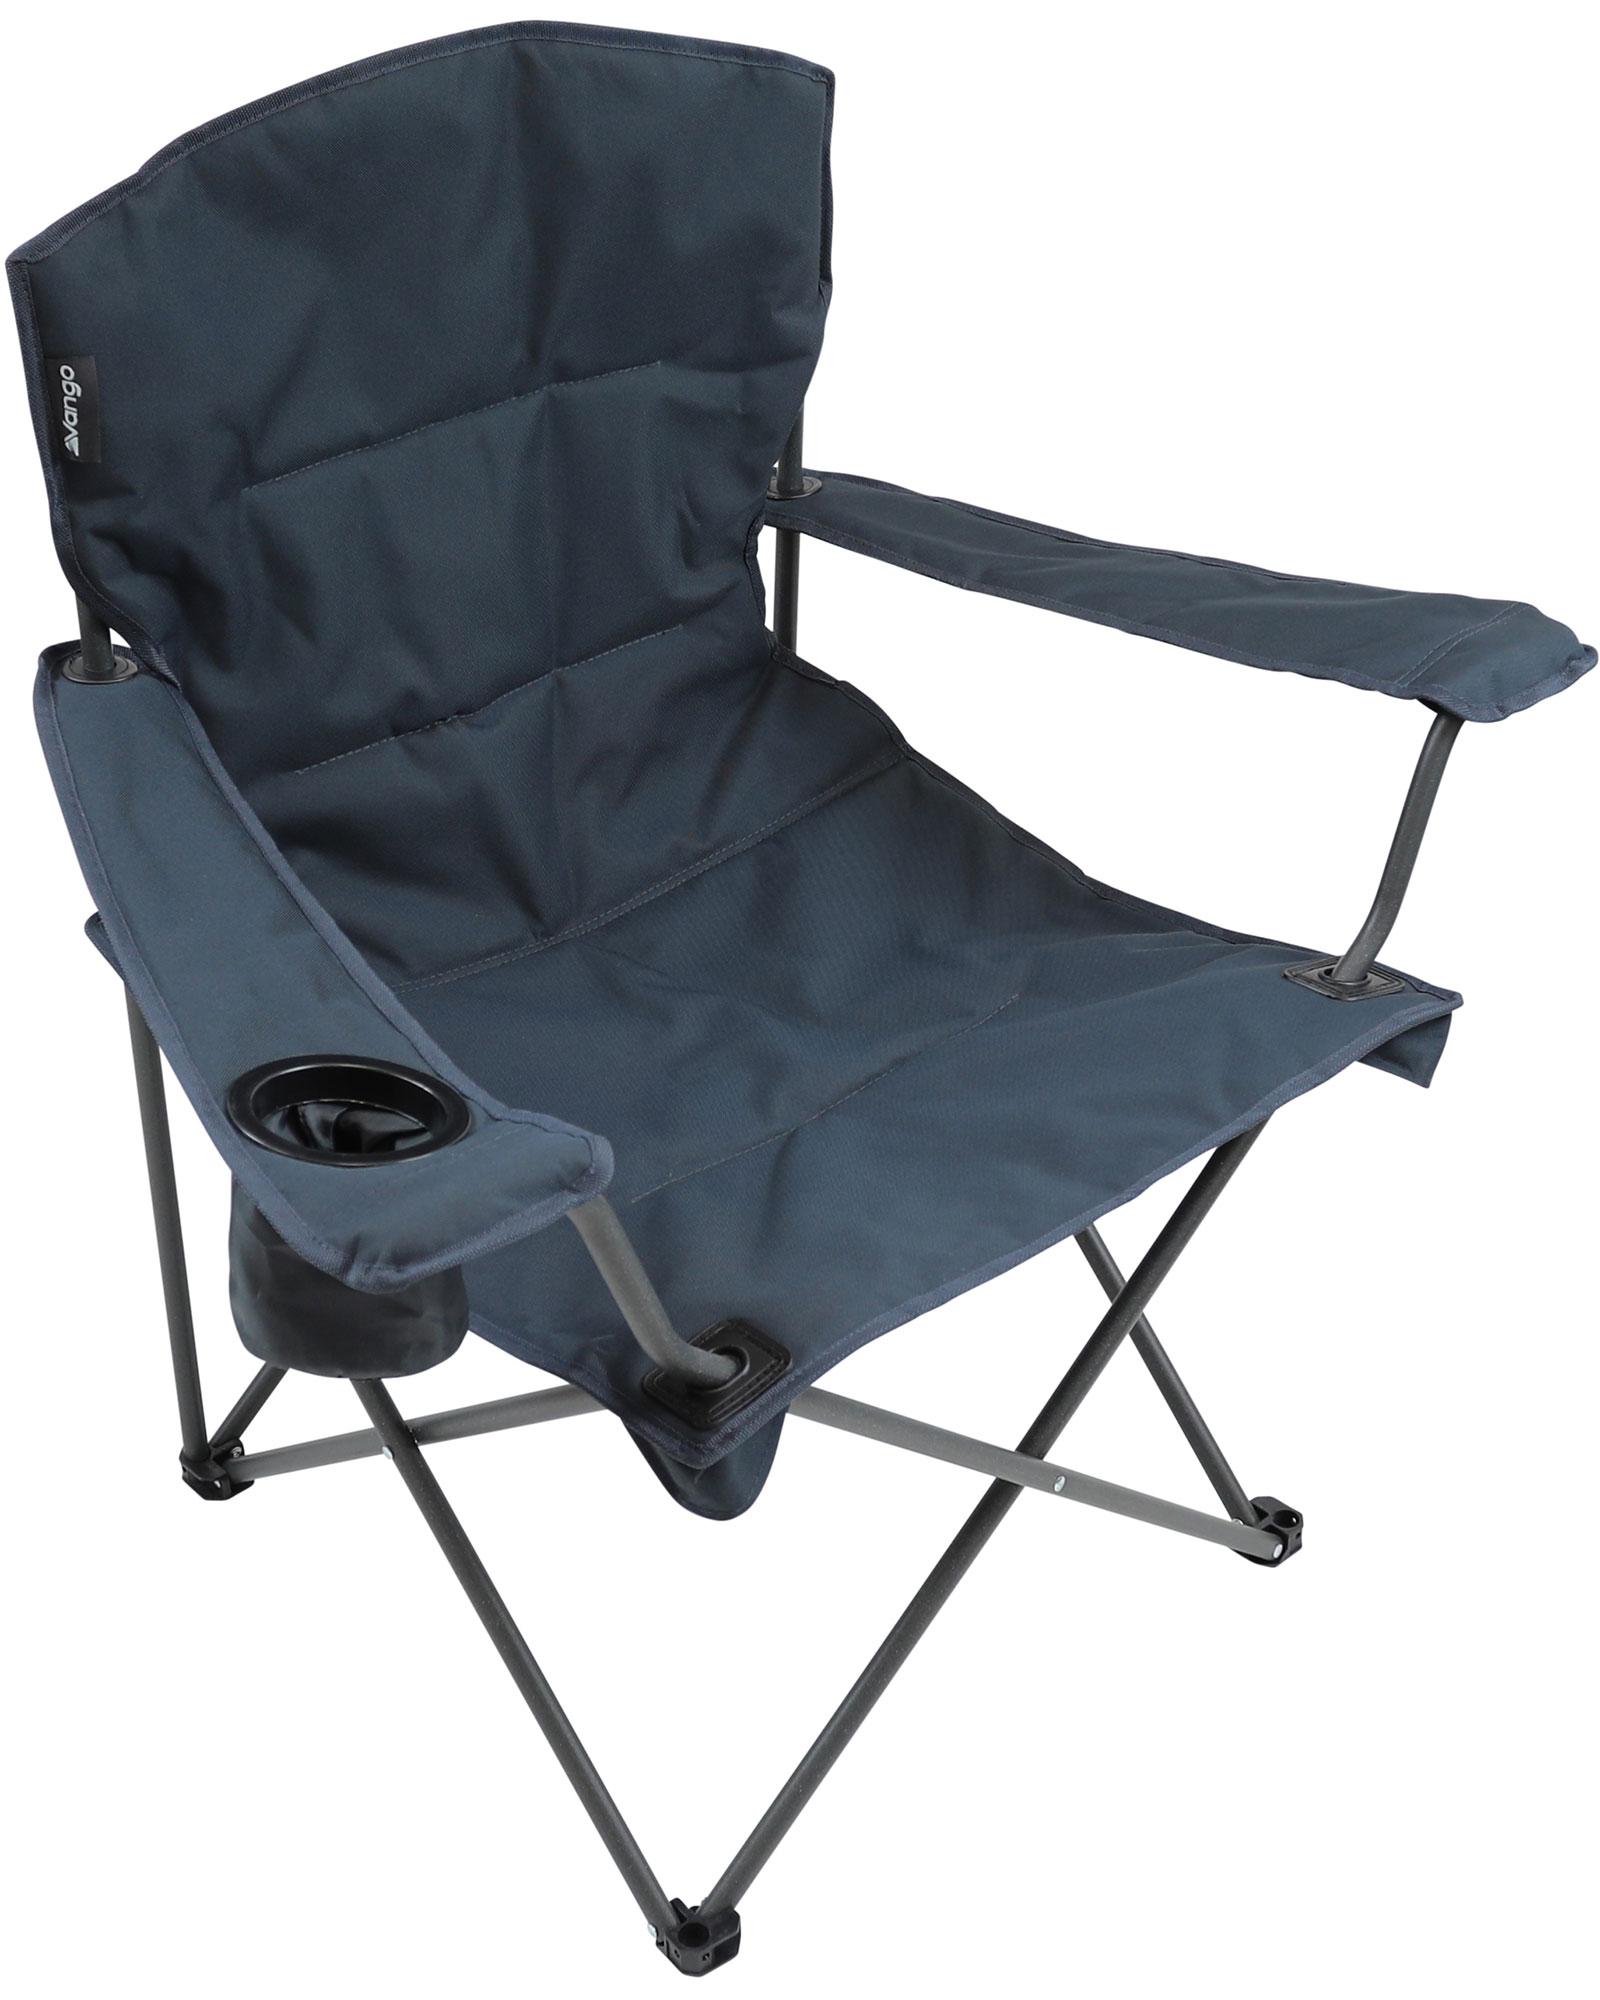 Vango Malibu Chair - Granite Grey